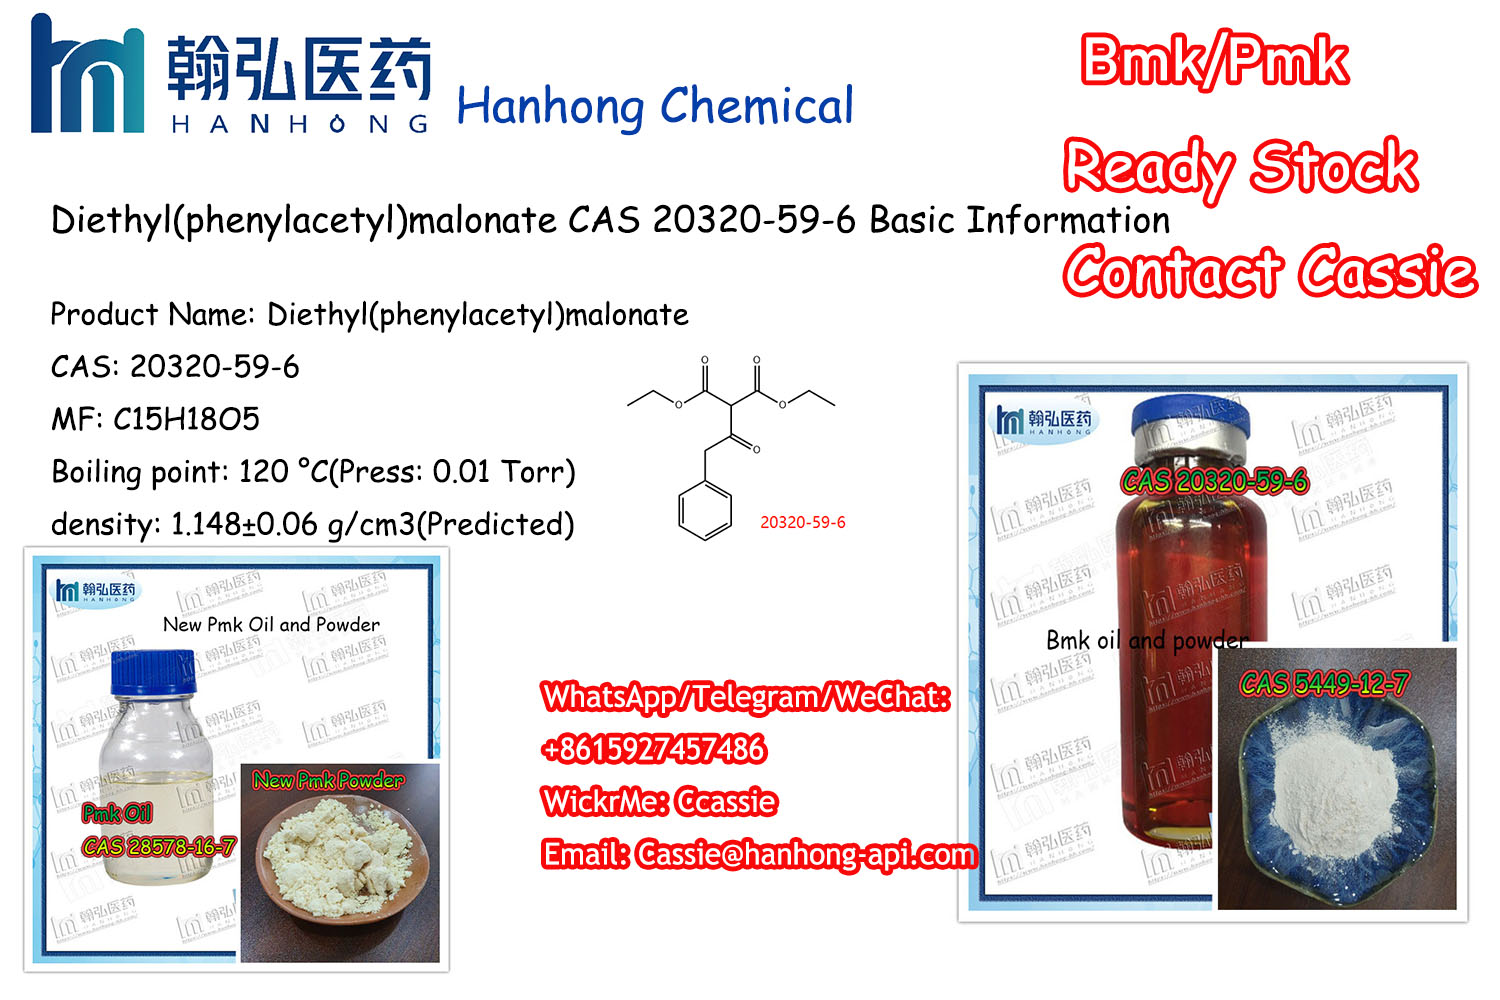 Hanhong Reliable Supplier in China BMK Oil 20320-59-6/ Bmk Powder 5449-12-7/Pmk Oil CAS 28578-16-7/New Pmk Powder 28578-16-7 (WhastApp/Telegram/WeChat: +8615927457486 WickrMe: Ccassie